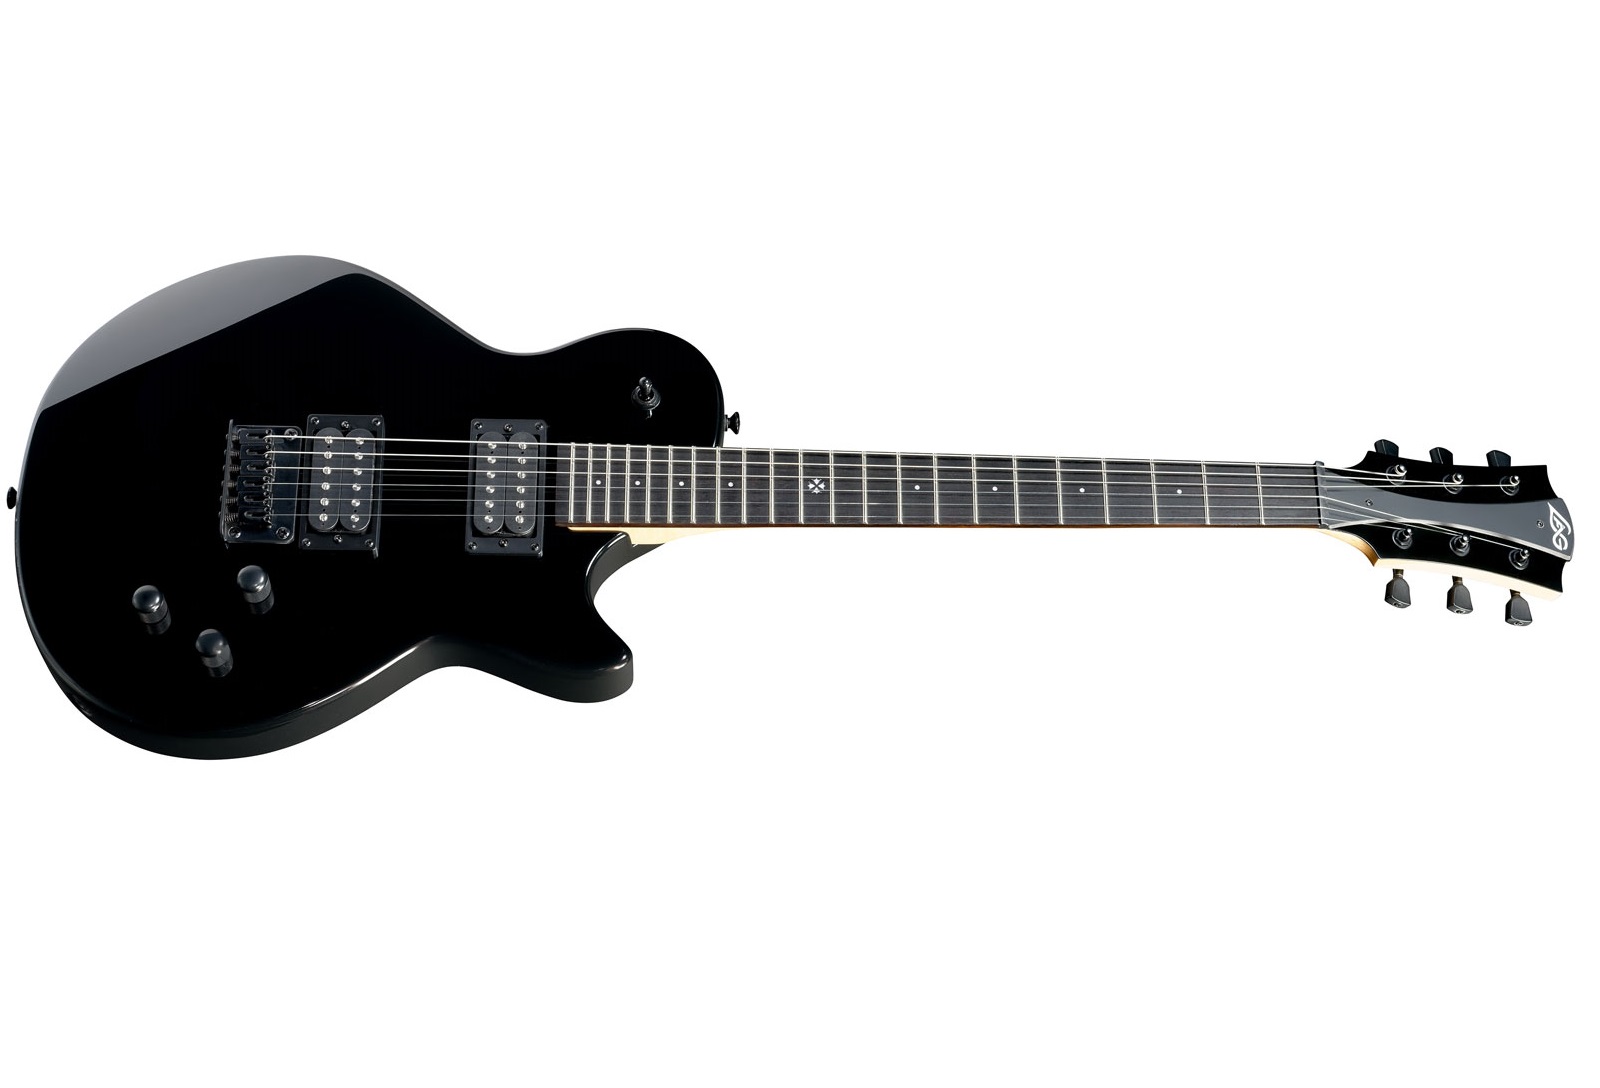 Lag Imperator 60 Hh Ht Rw - Black - Single cut electric guitar - Variation 1